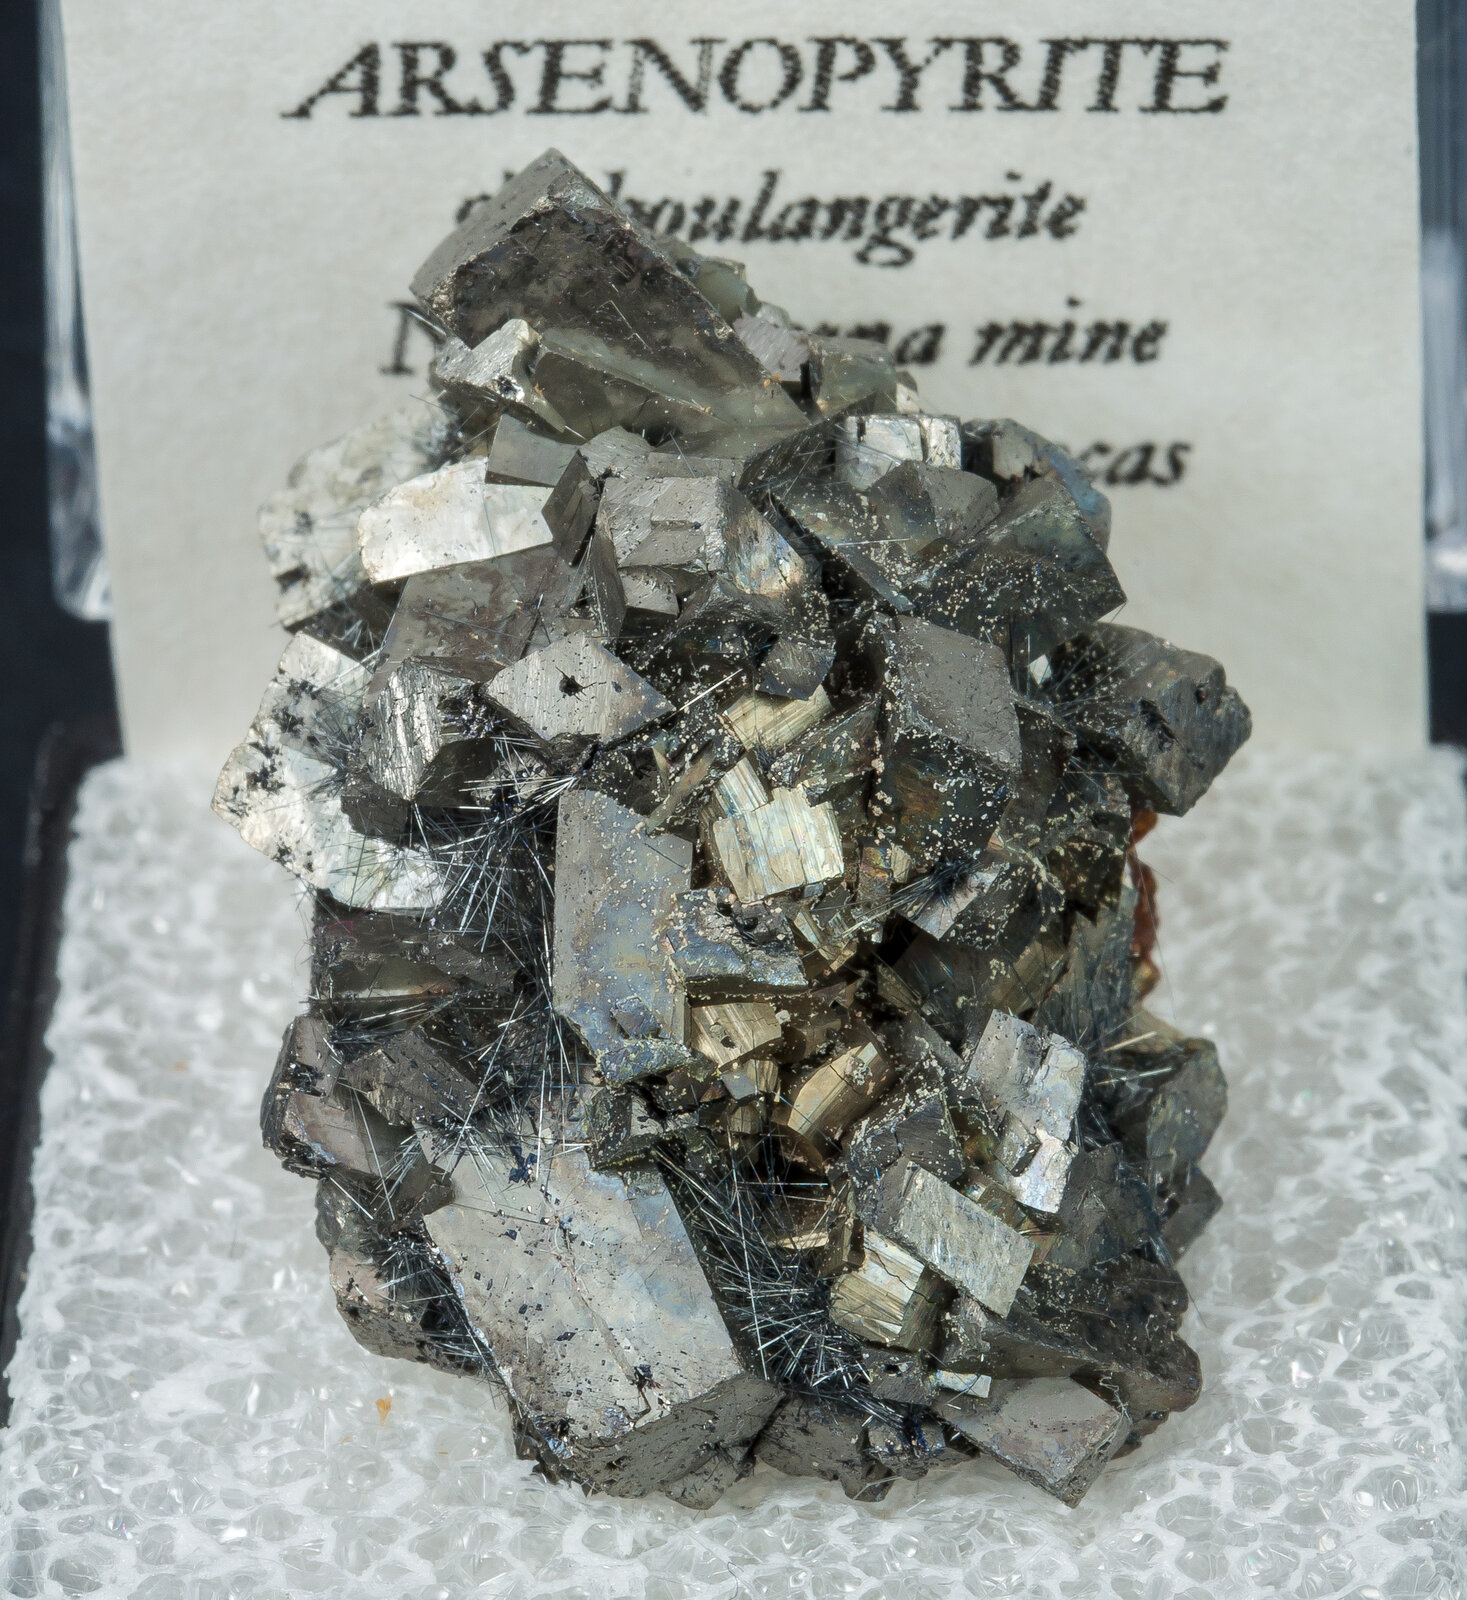 specimens/s_imagesAN2/Arsenopyrite-TG14AN2f2.jpg